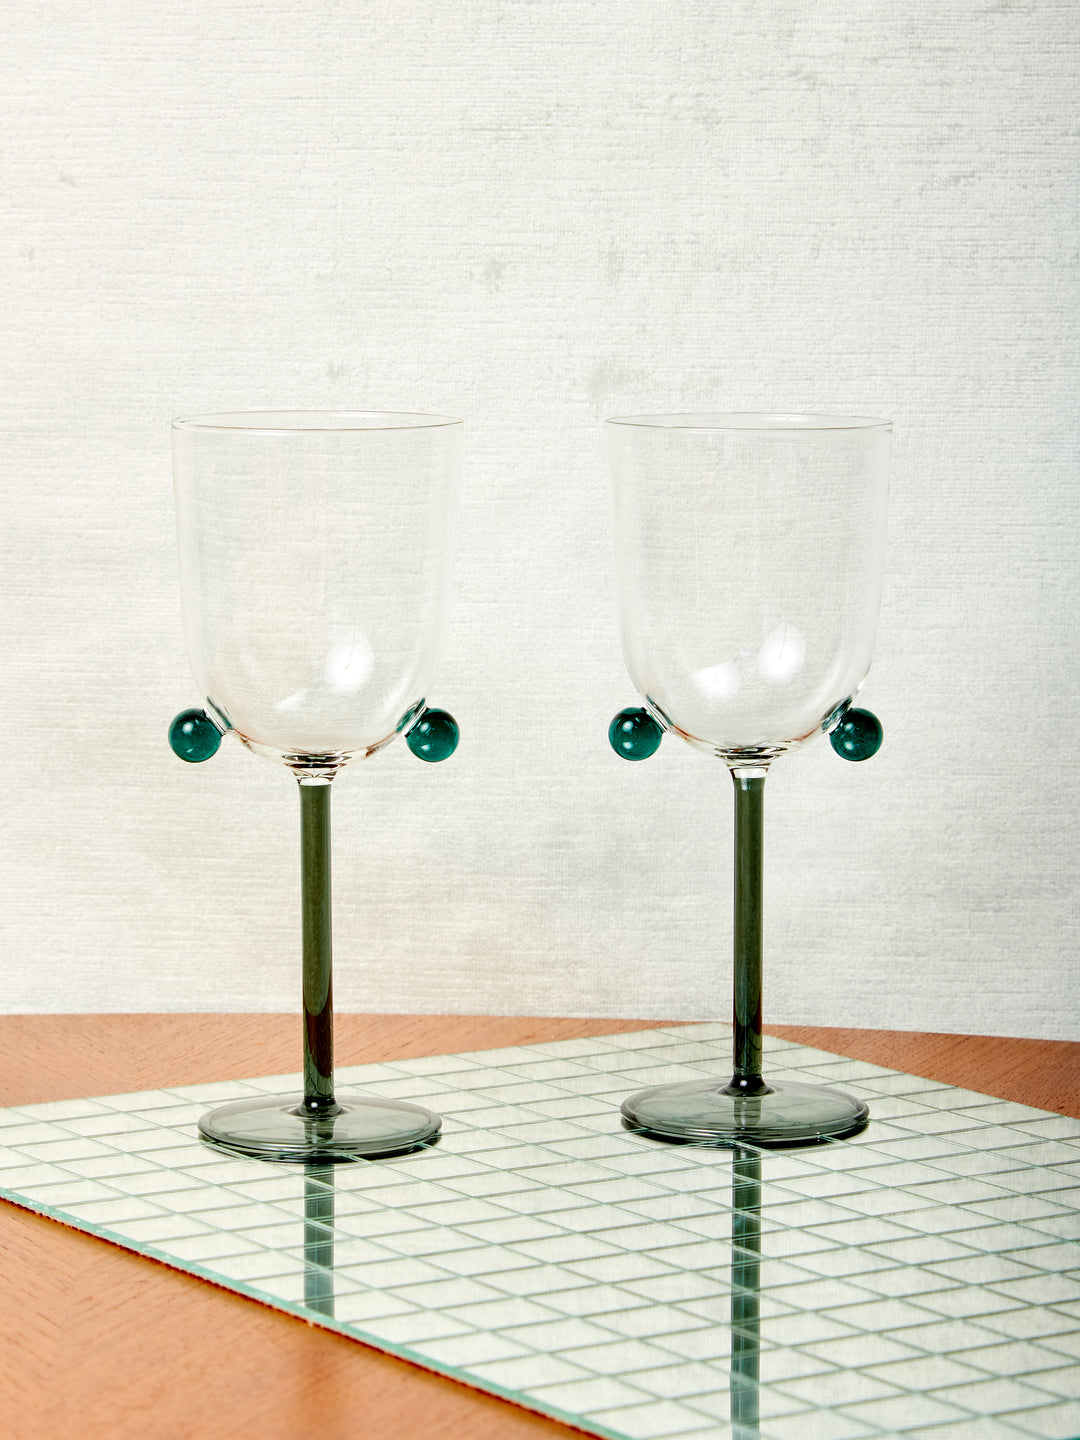 Pompom Wine Glasses – Coming Soon